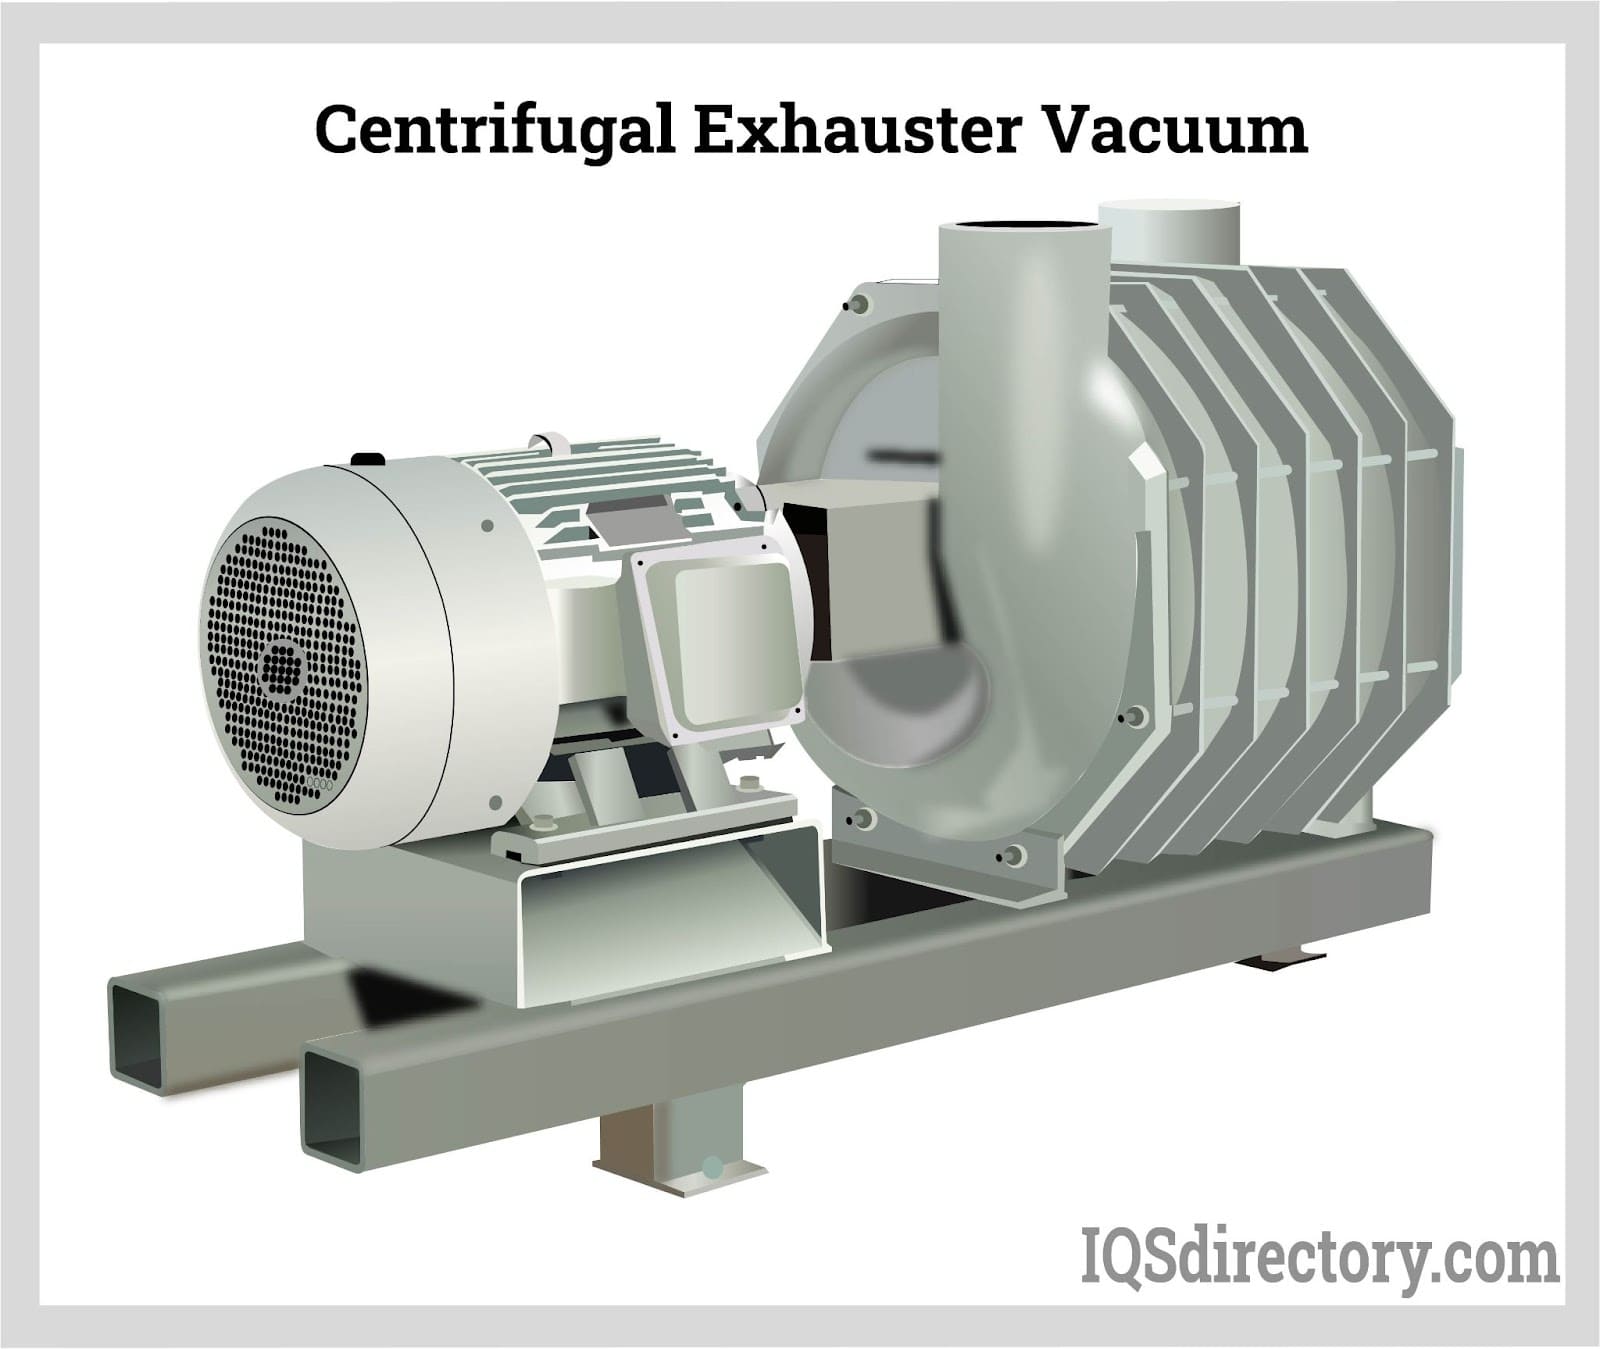 Centrifugal Exhauster Vacuum